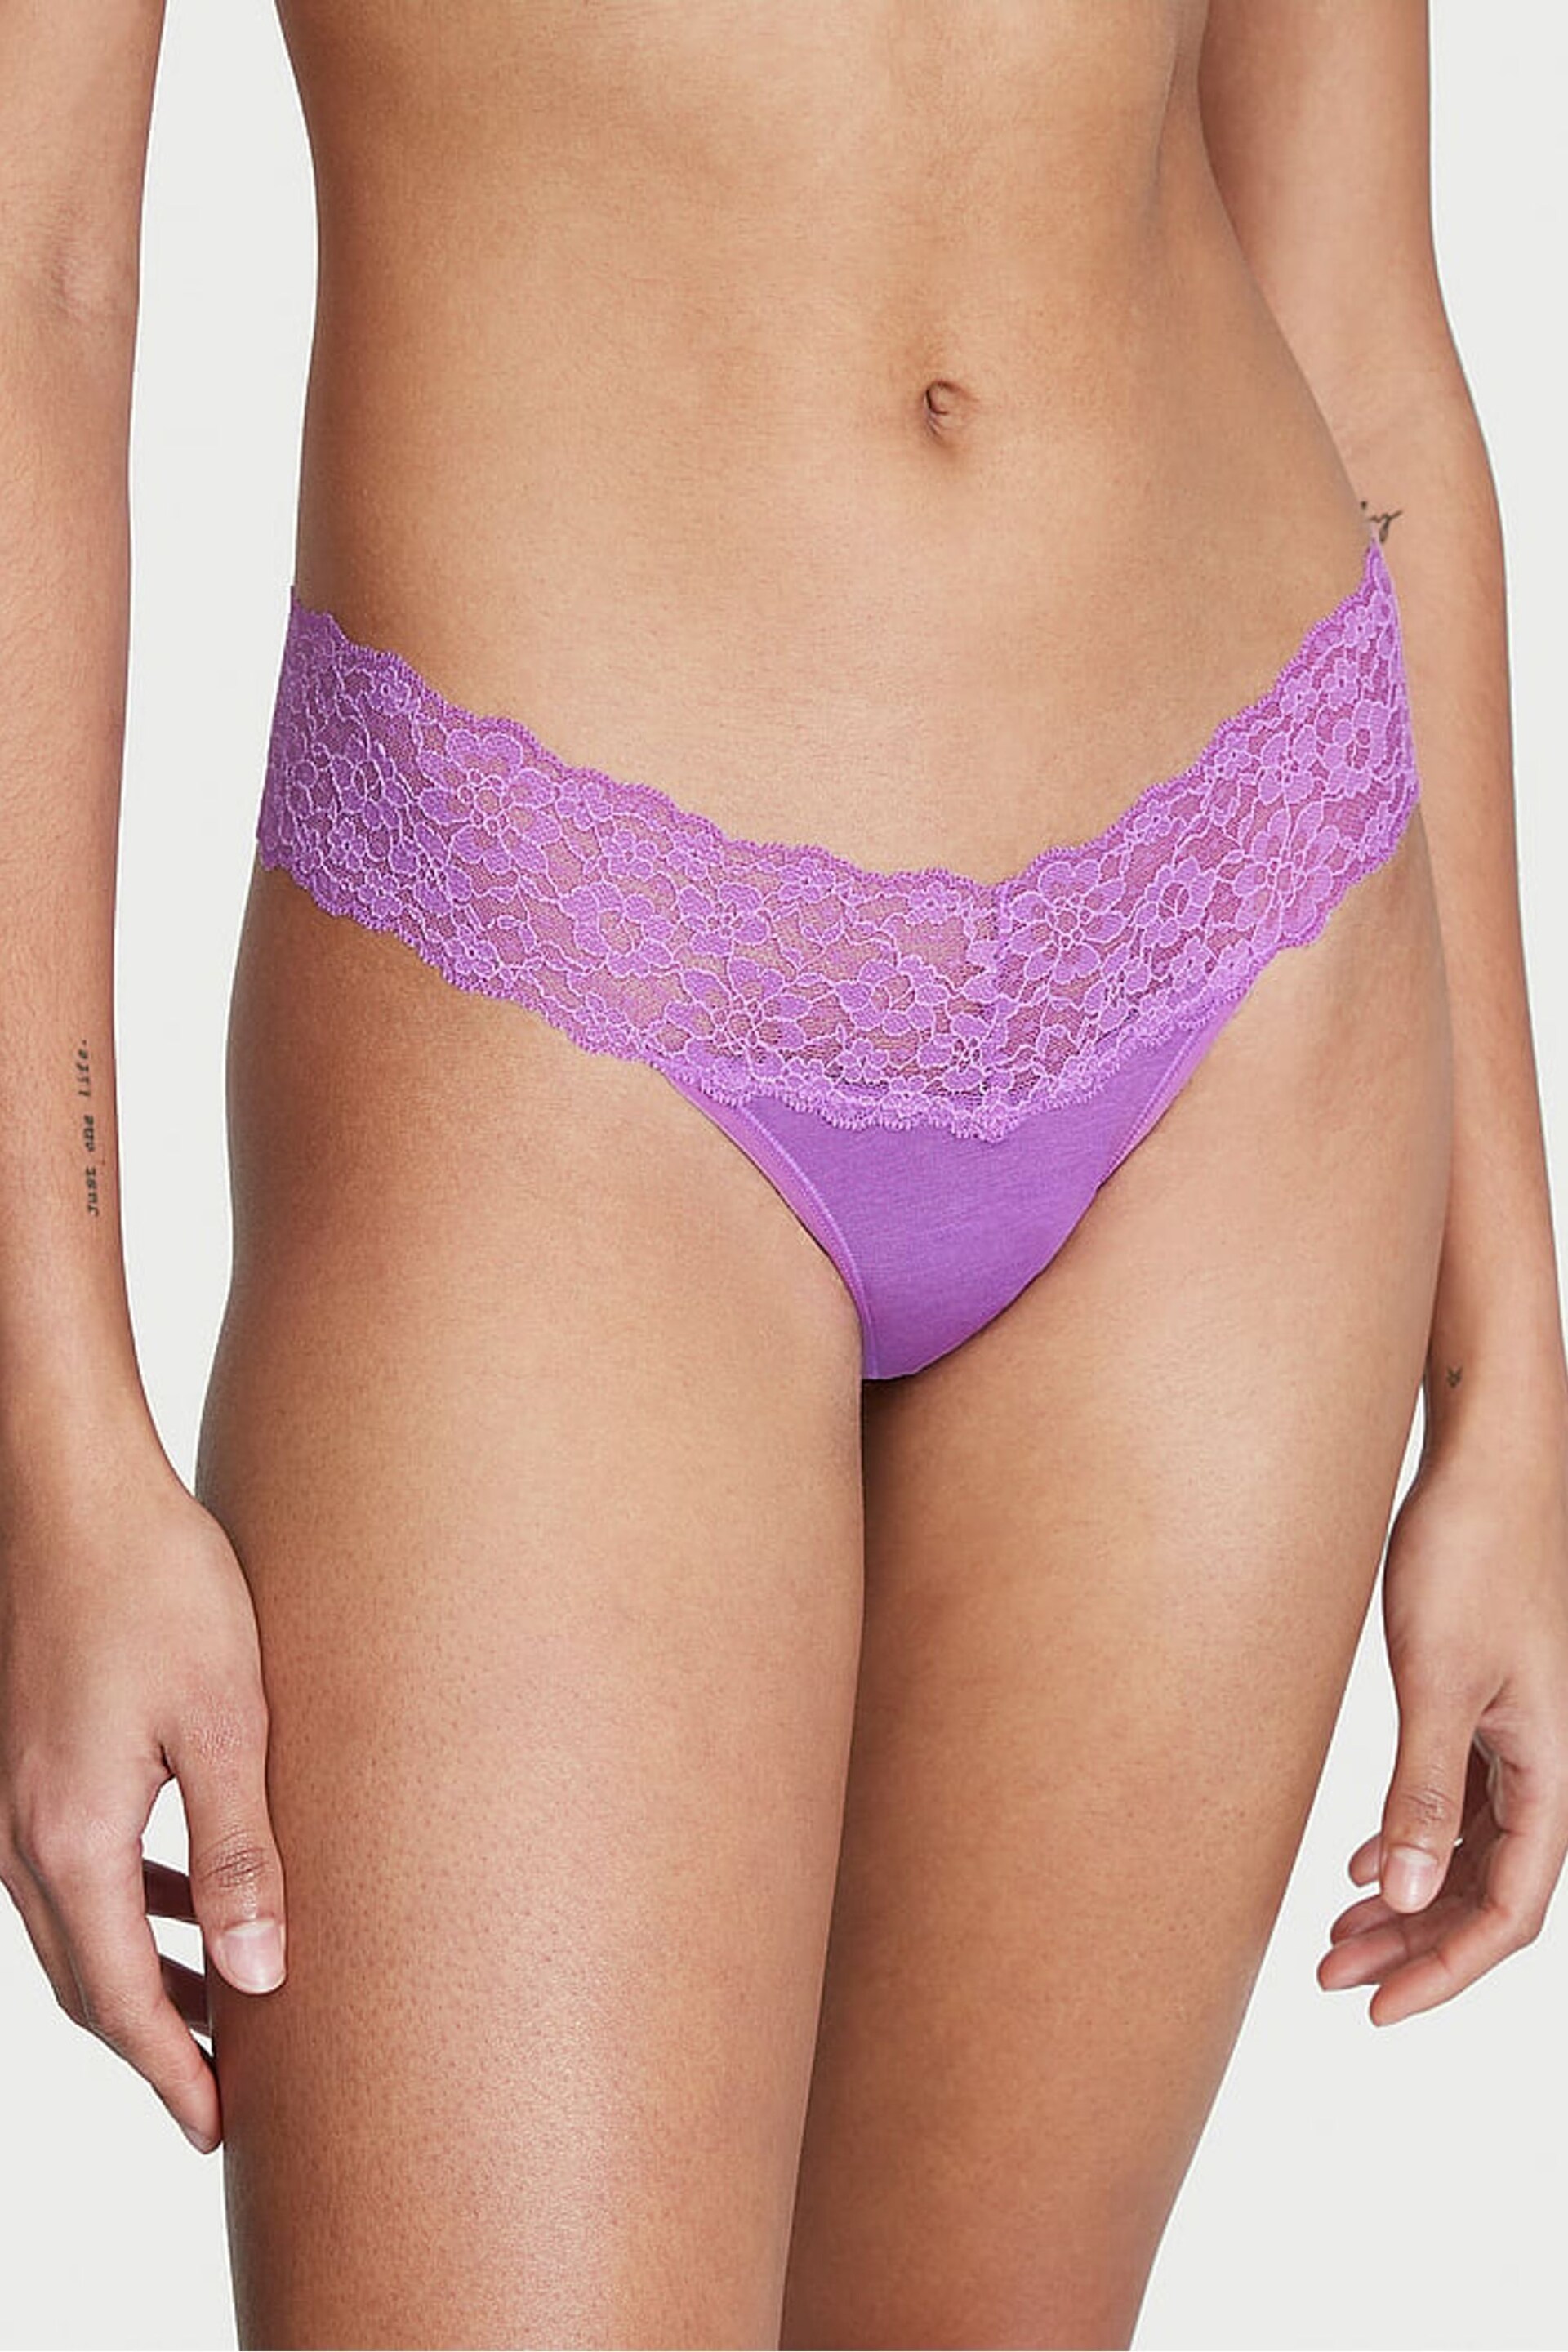 Victoria's Secret Purple Paradise Lace Waist Thong Knickers - Image 1 of 3